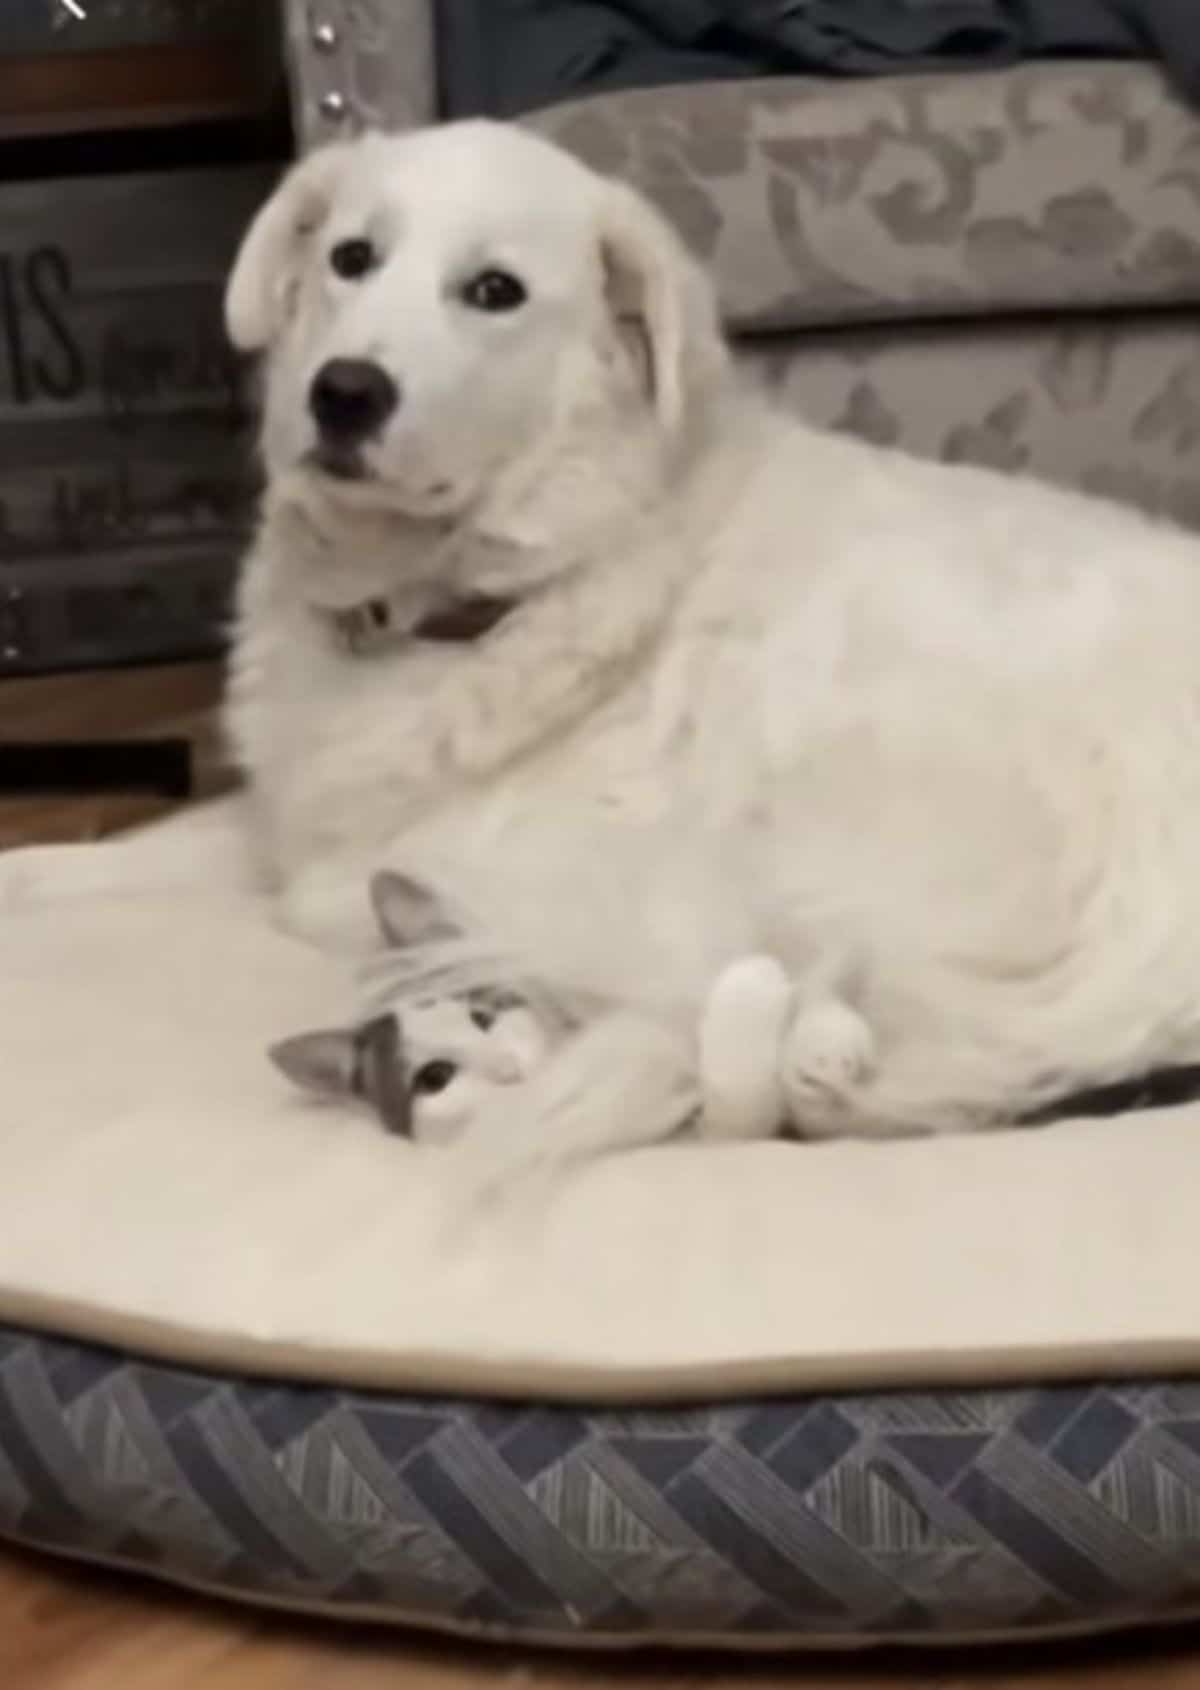 large white dog sitting on a white and grey tabby cat laying on a white and grey dog bed